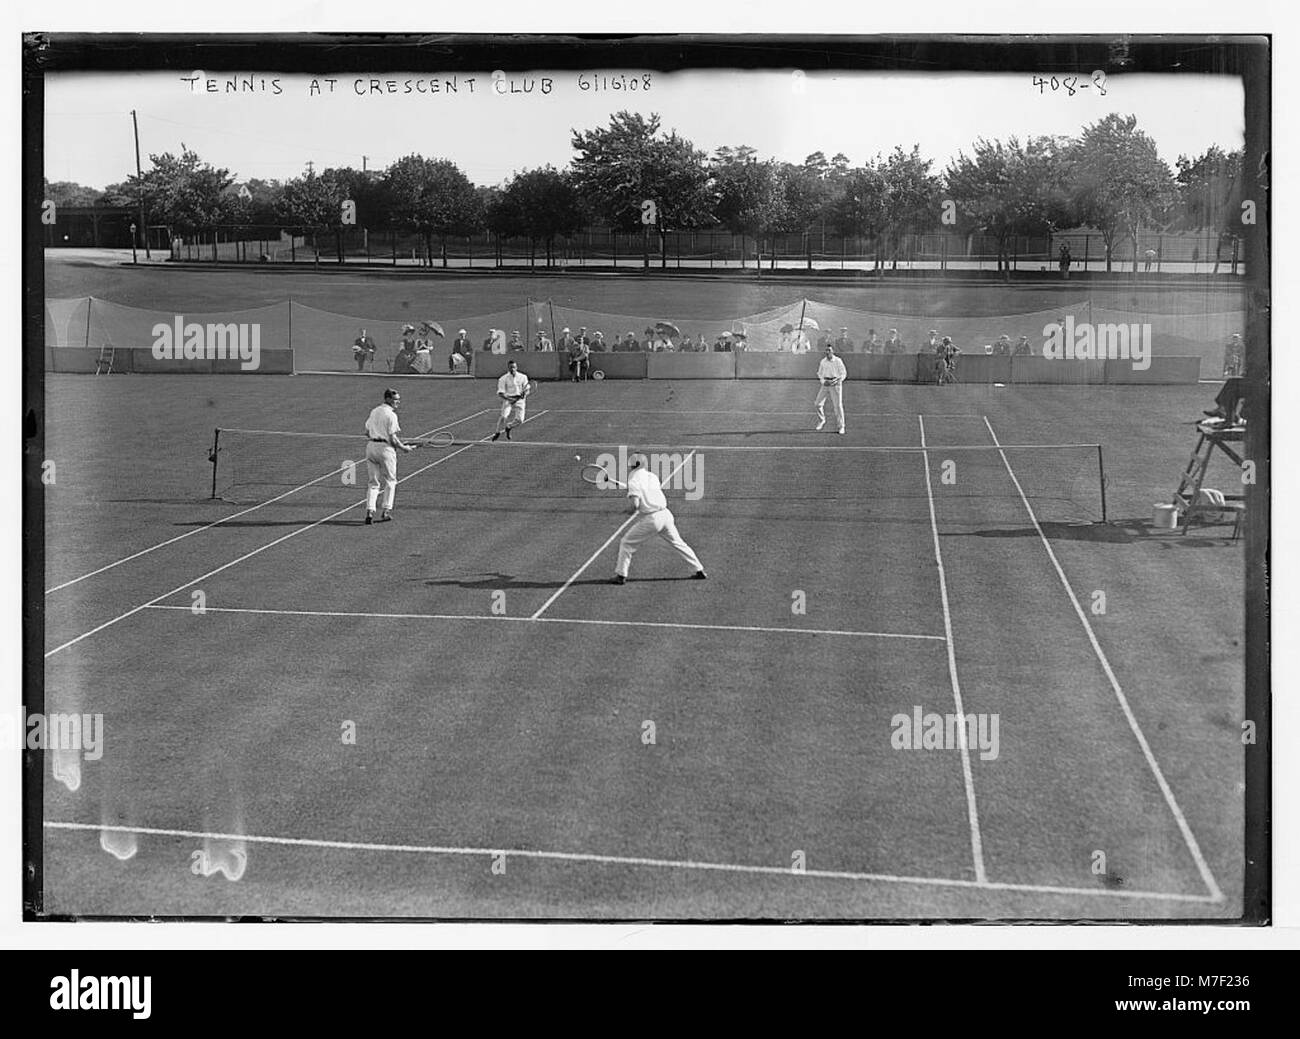 Tennis match at Cresent Club LCCN2014681922 Stock Photo